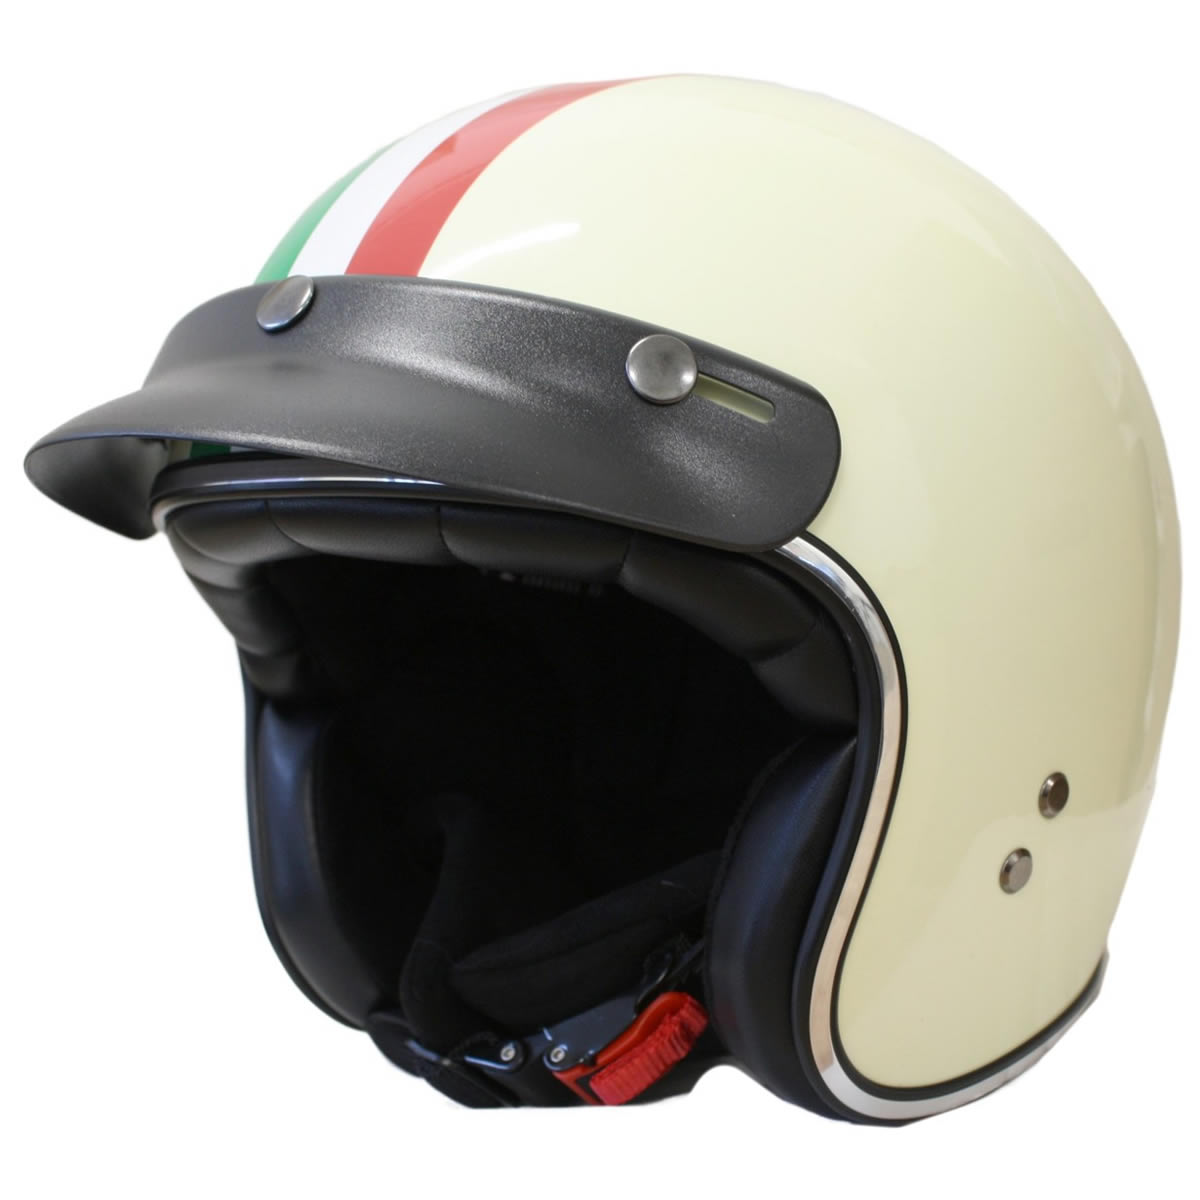 Redbike RB802 Italia Helm, elfenbein-grün-weiß-rot